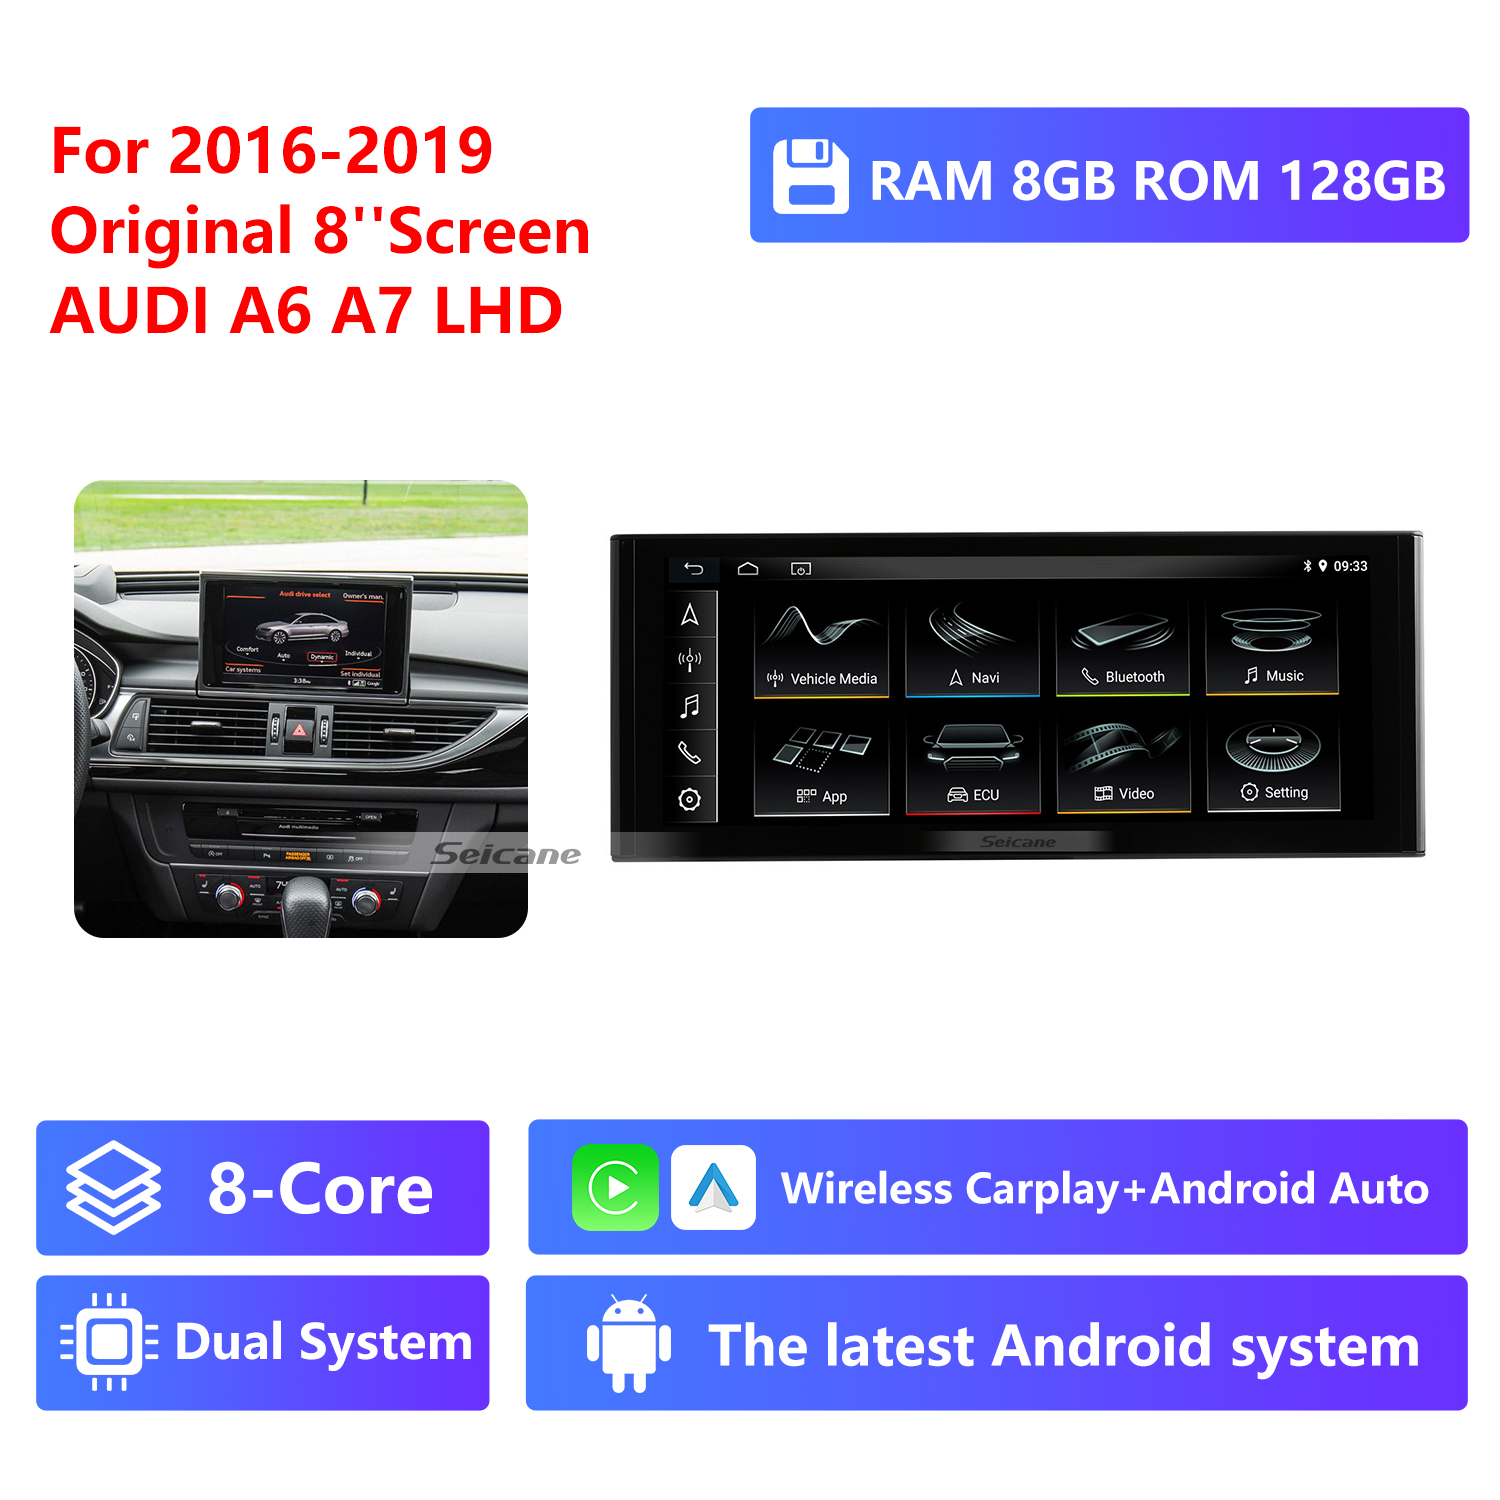 8-Core RAM 8G ROM 128G,2016-2019, Original 8"Screen,LHD